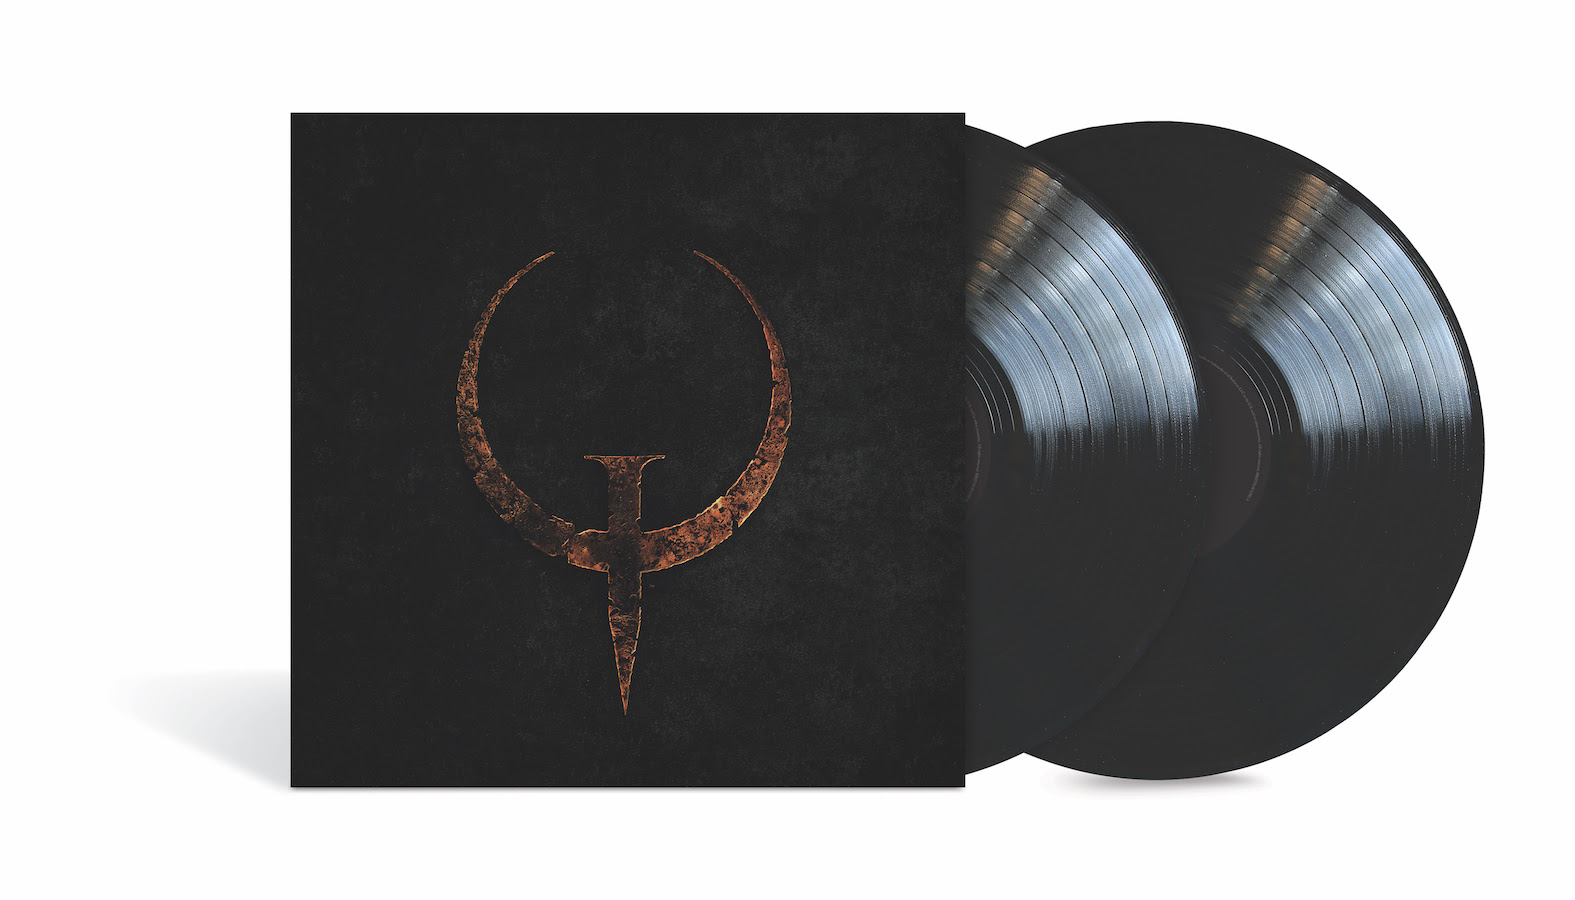 Саундтрек винил. Nine inch Nails Quake. Nine inch Nails Quake 2 LP. Nine inch Nails в Quake 2. Quake Remastered 2xlp (LP, Vinyl).